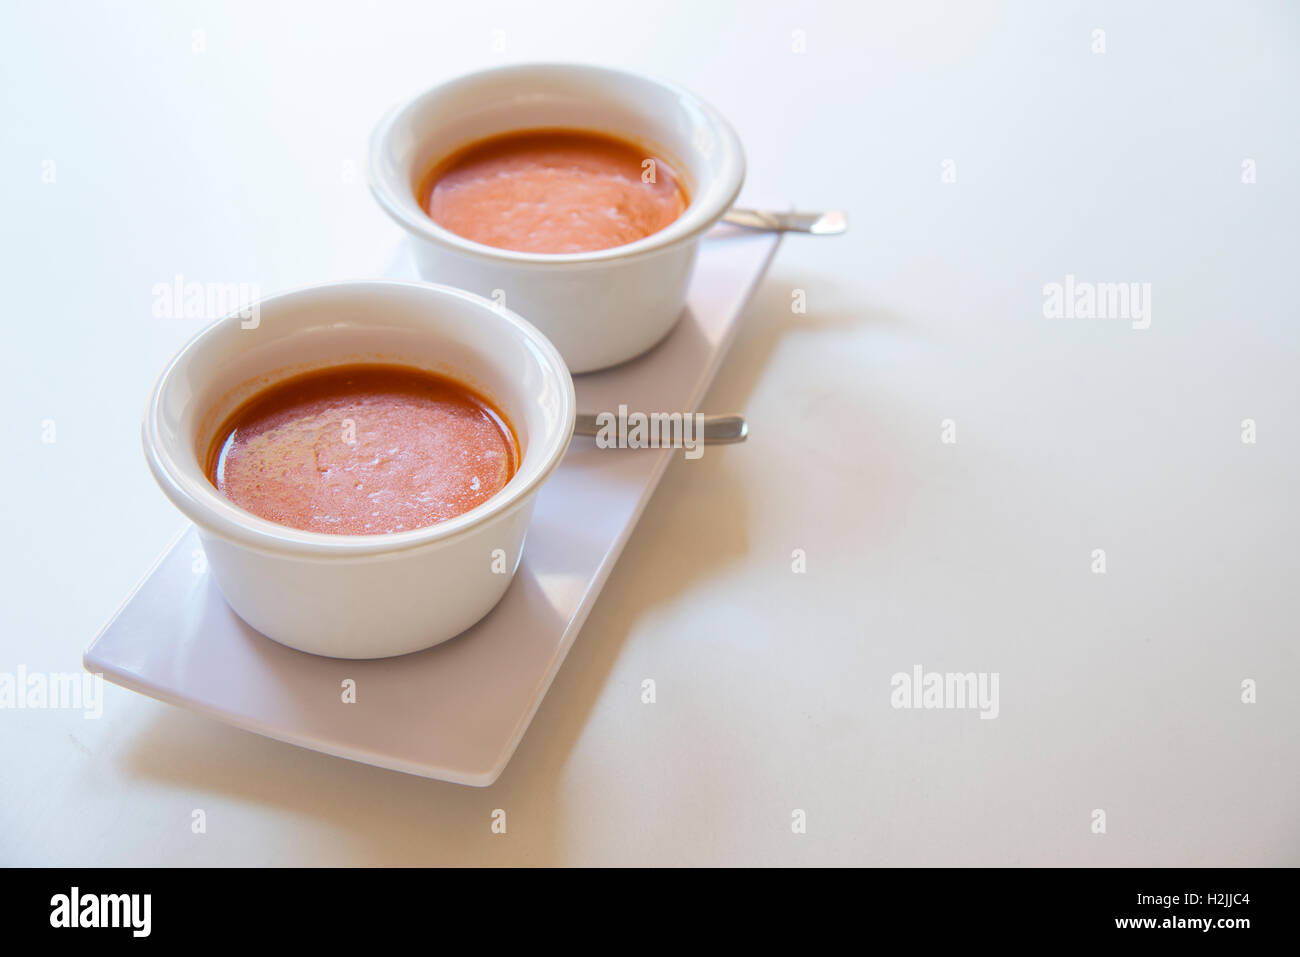 Two bowls of gazpacho. Stock Photo